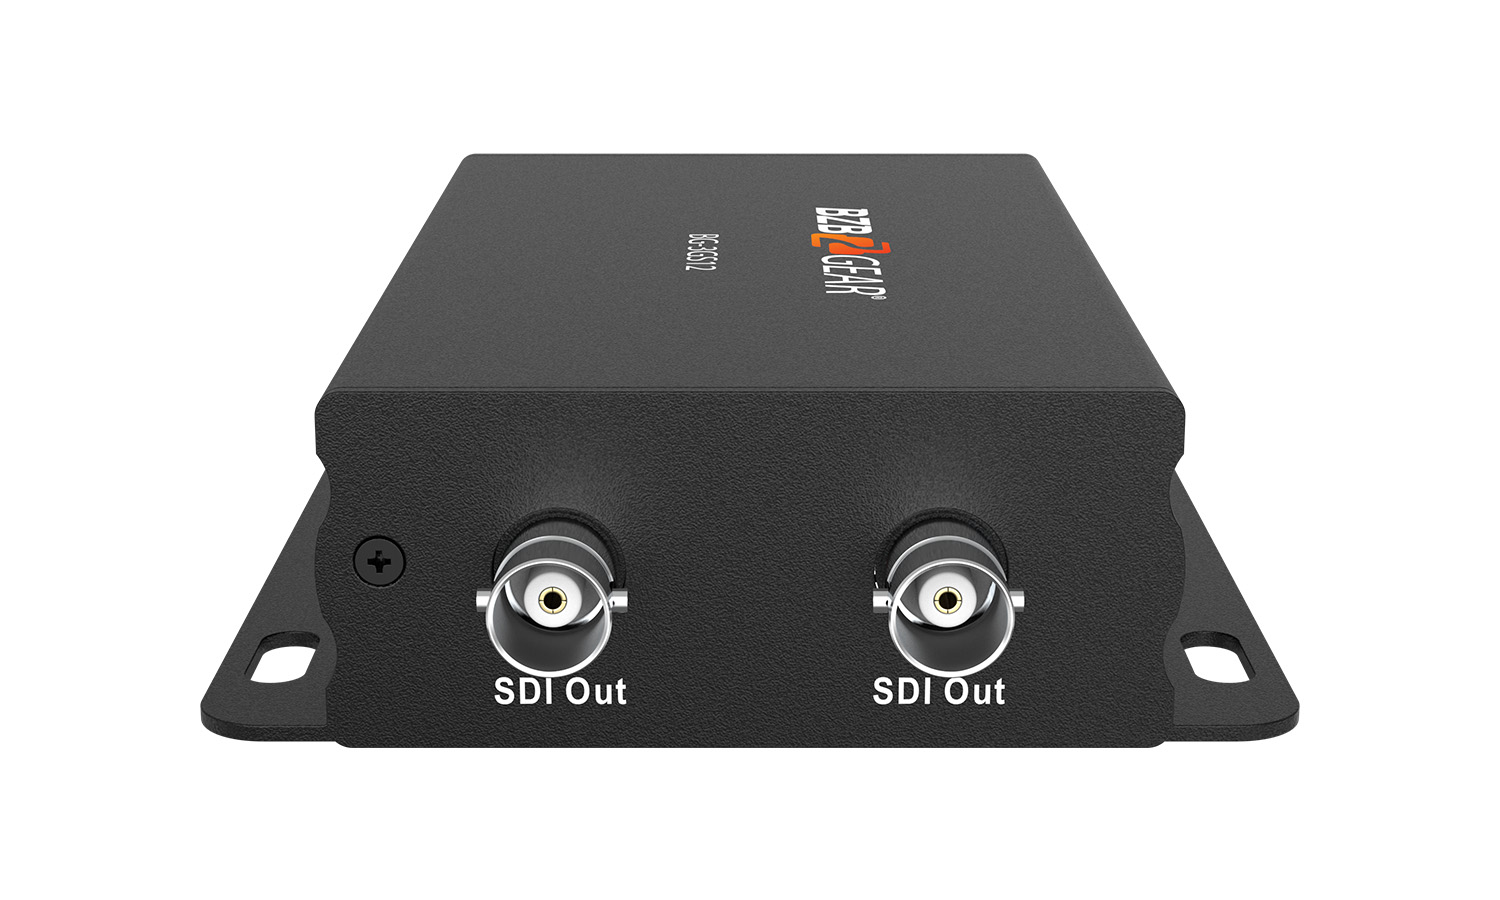 BG-3GS12 1080P FHD 3G-SDI 1x2 SPLITTER/Distribution Amplifier by BZBGEAR